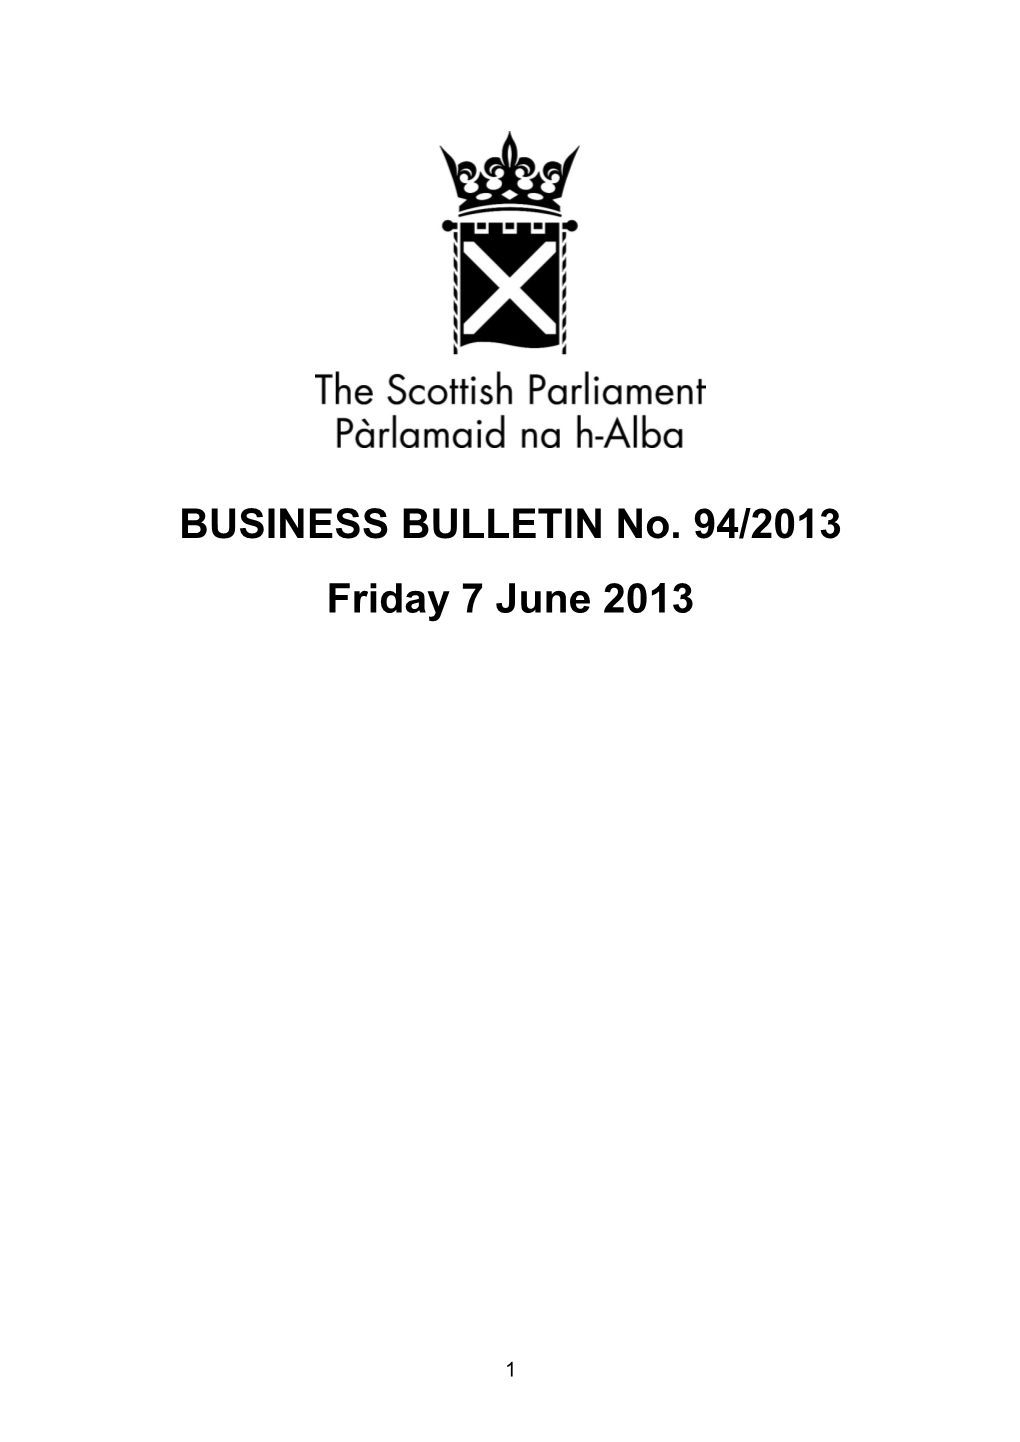 BUSINESS BULLETIN No. 94/2013 Friday 7 June 2013